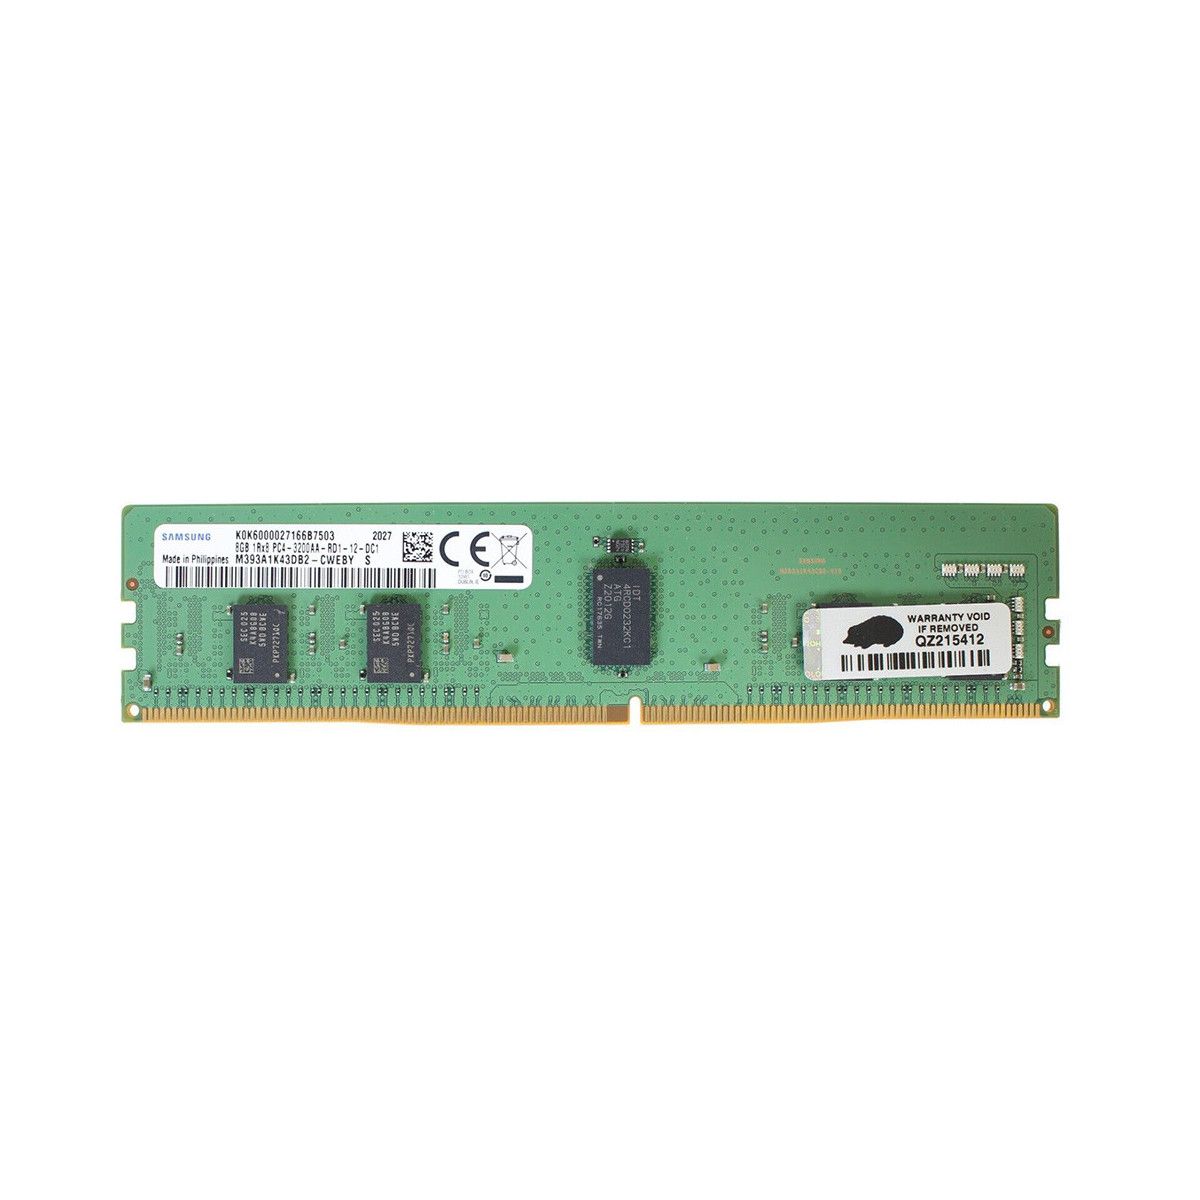 AA810825-MS - Memstar 1x 8GB DDR4-3200 RDIMM PC4-25600R - OEM compatible con Mem-Star Memoria 1 - Memstar 